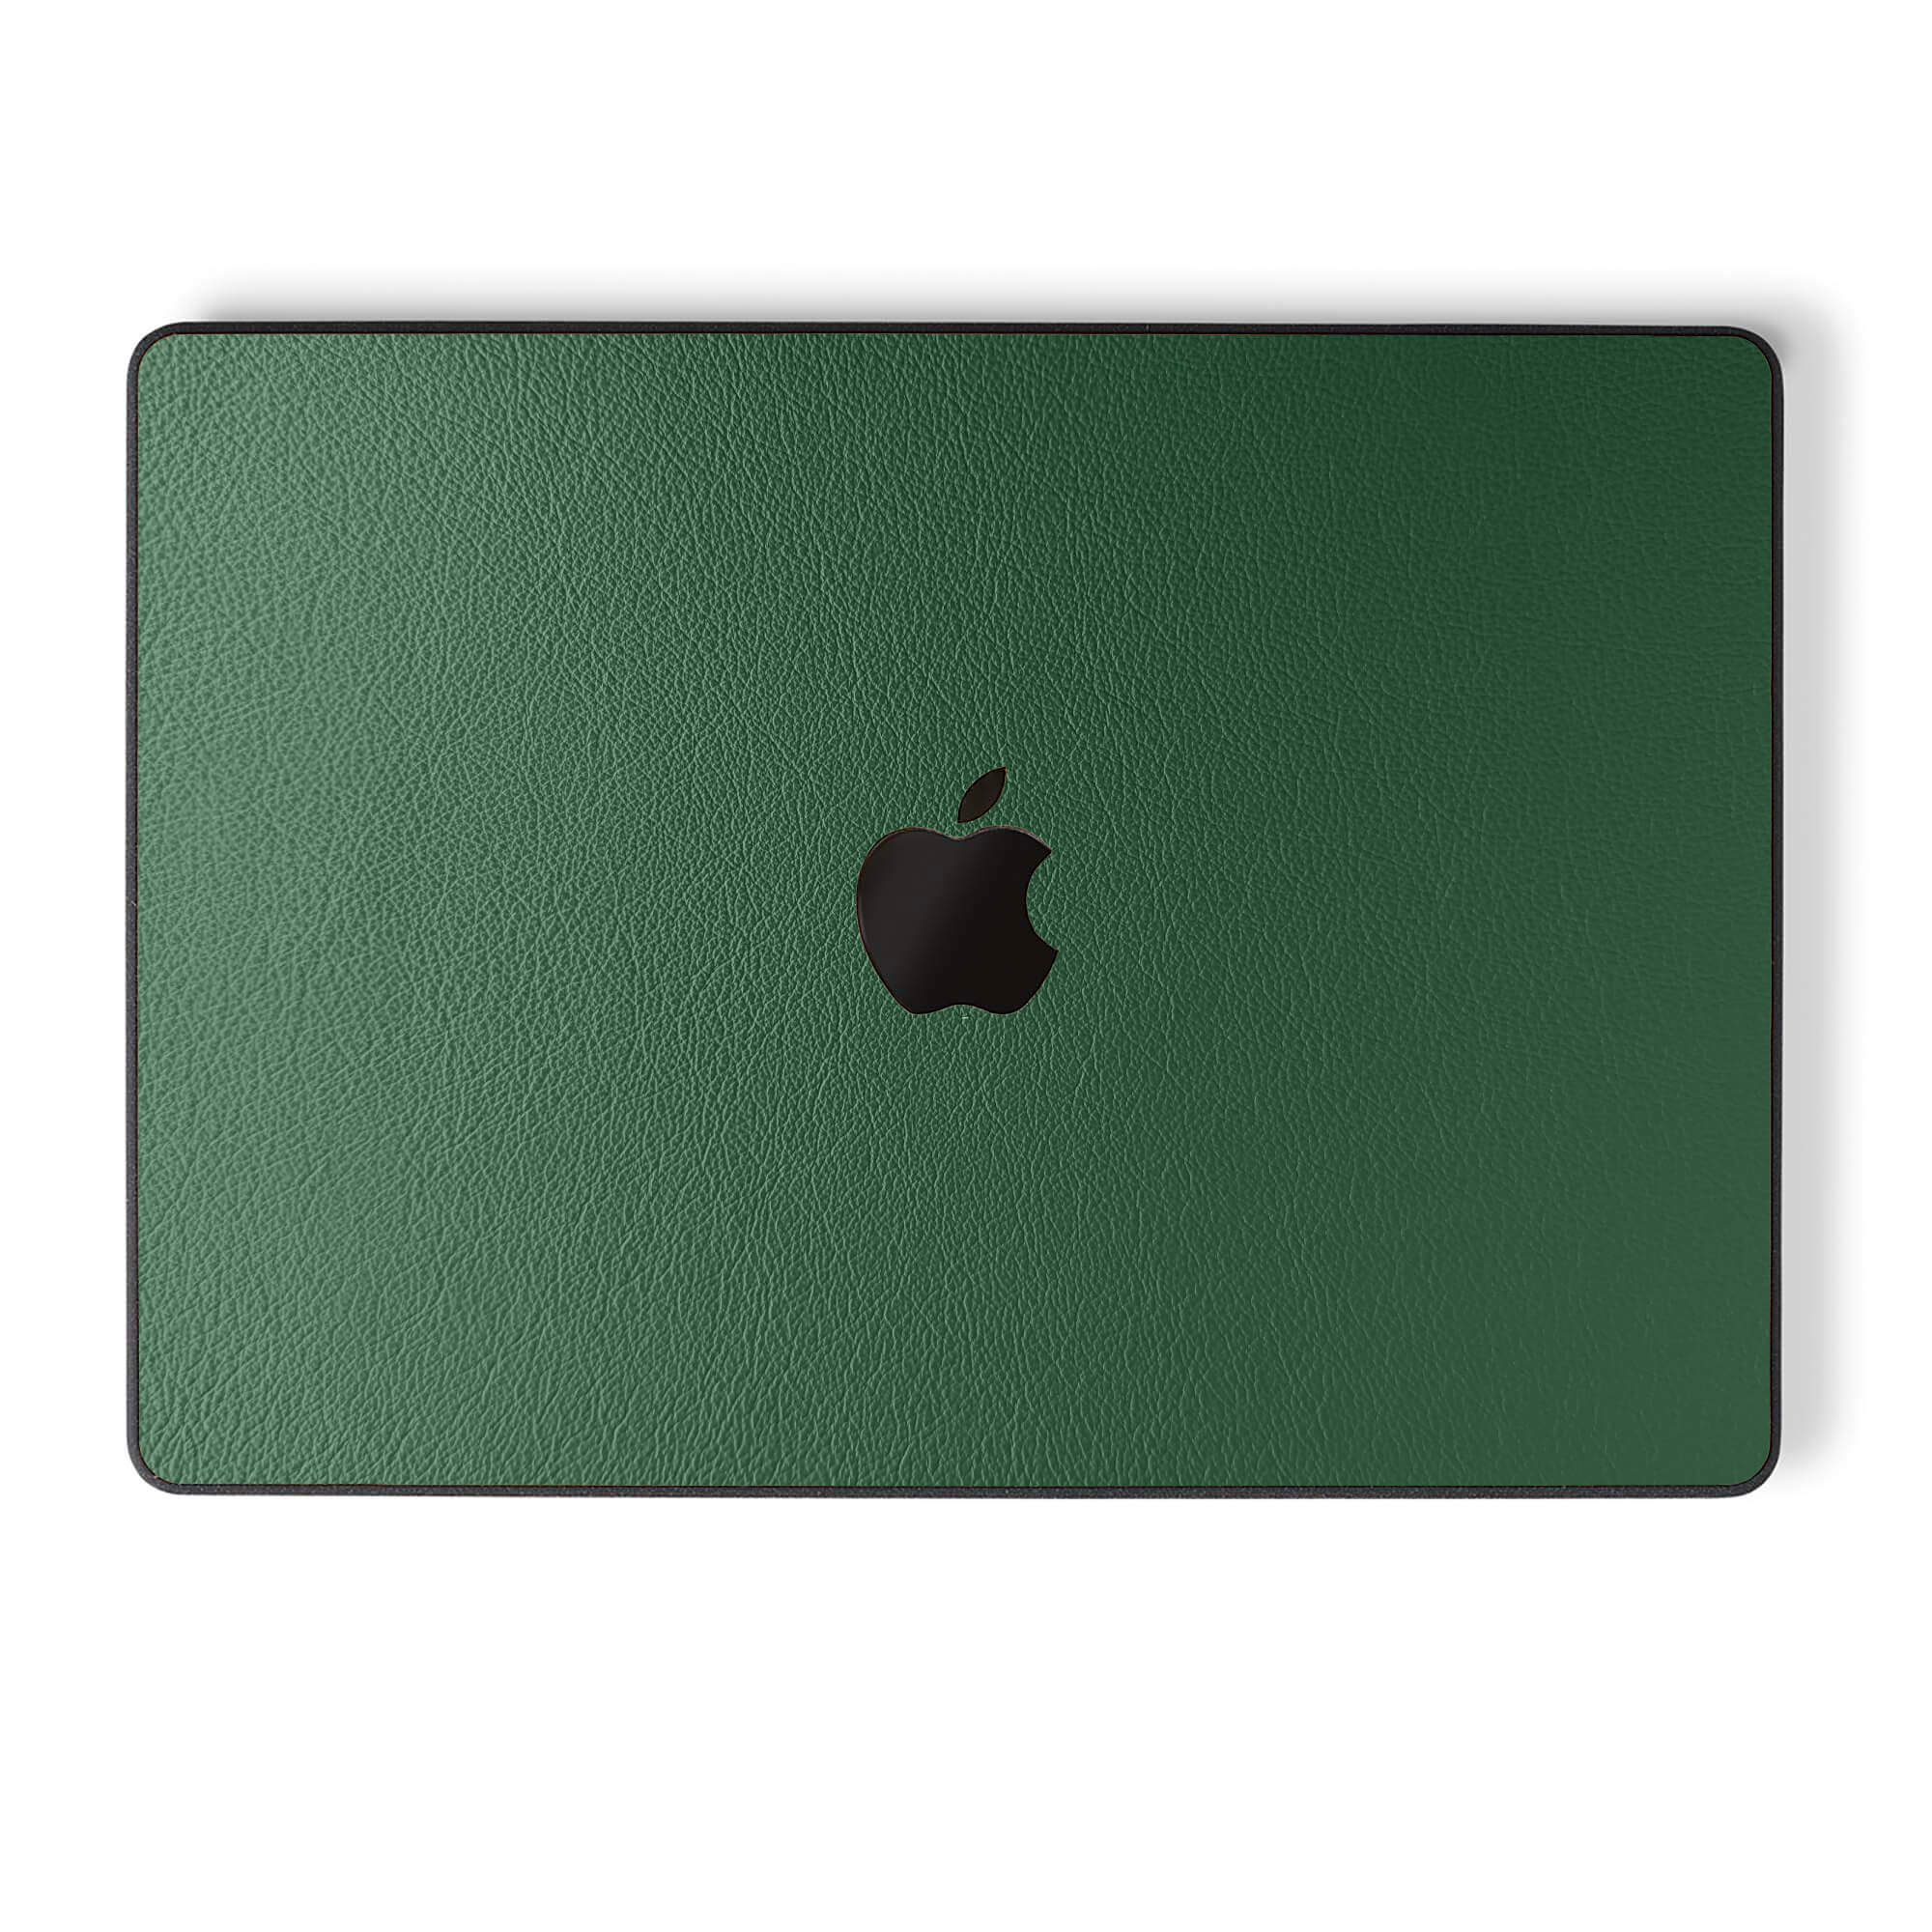 alt:Leather MacBook Case | var:forestgreen |